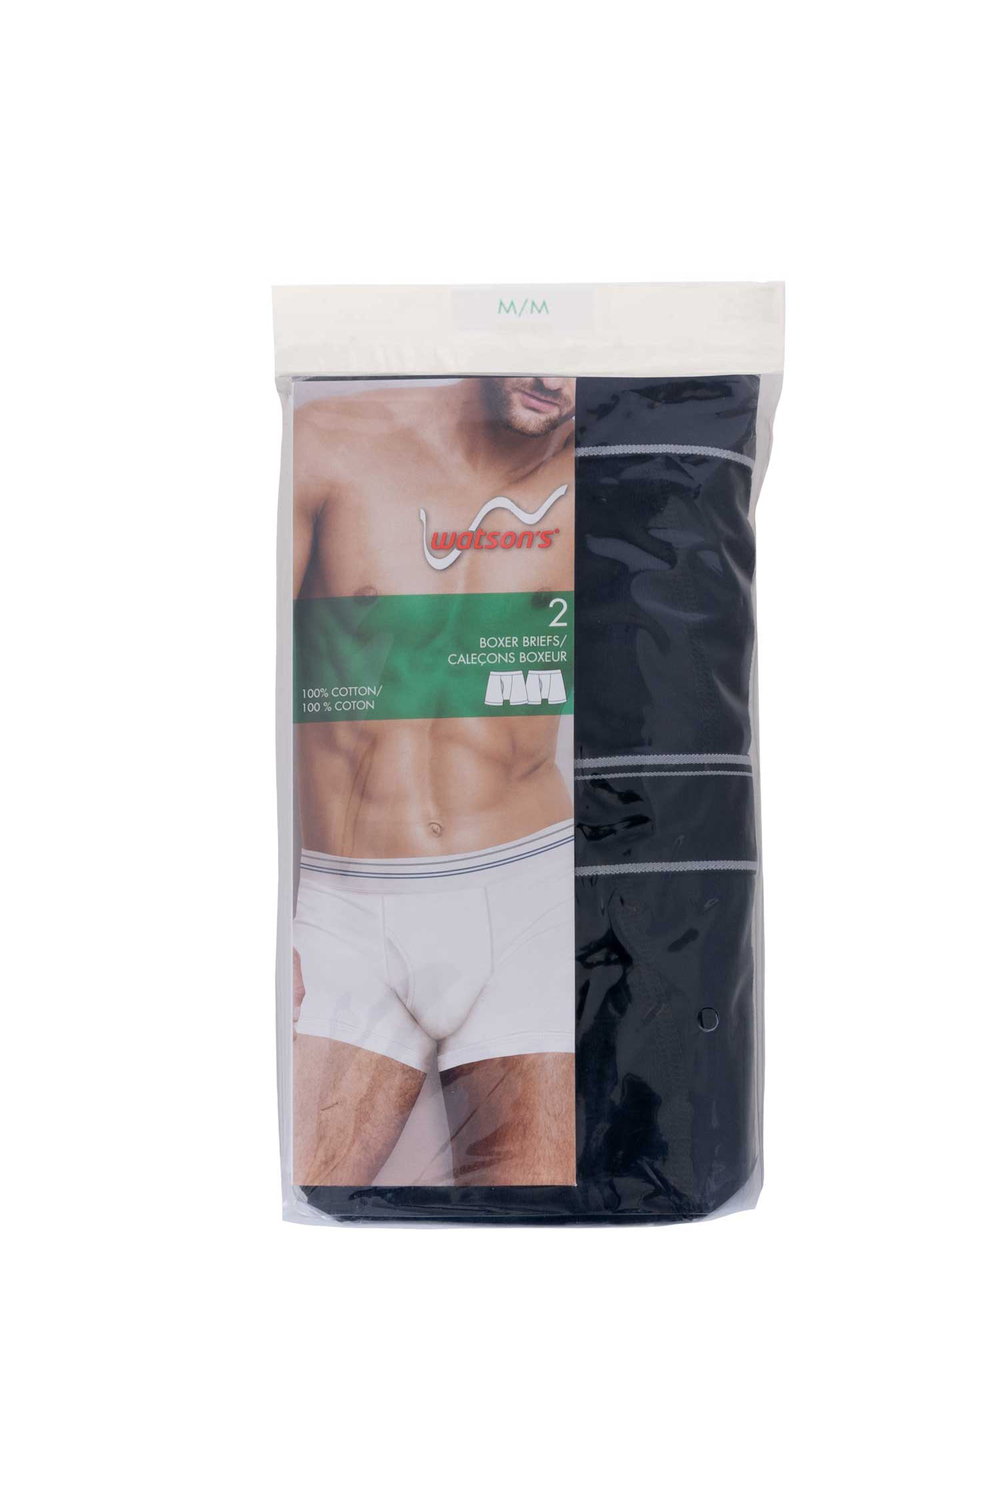 Watson's - Men's 100% cotton underwear, 2 pack boxer briefs, black, extra large (XL)